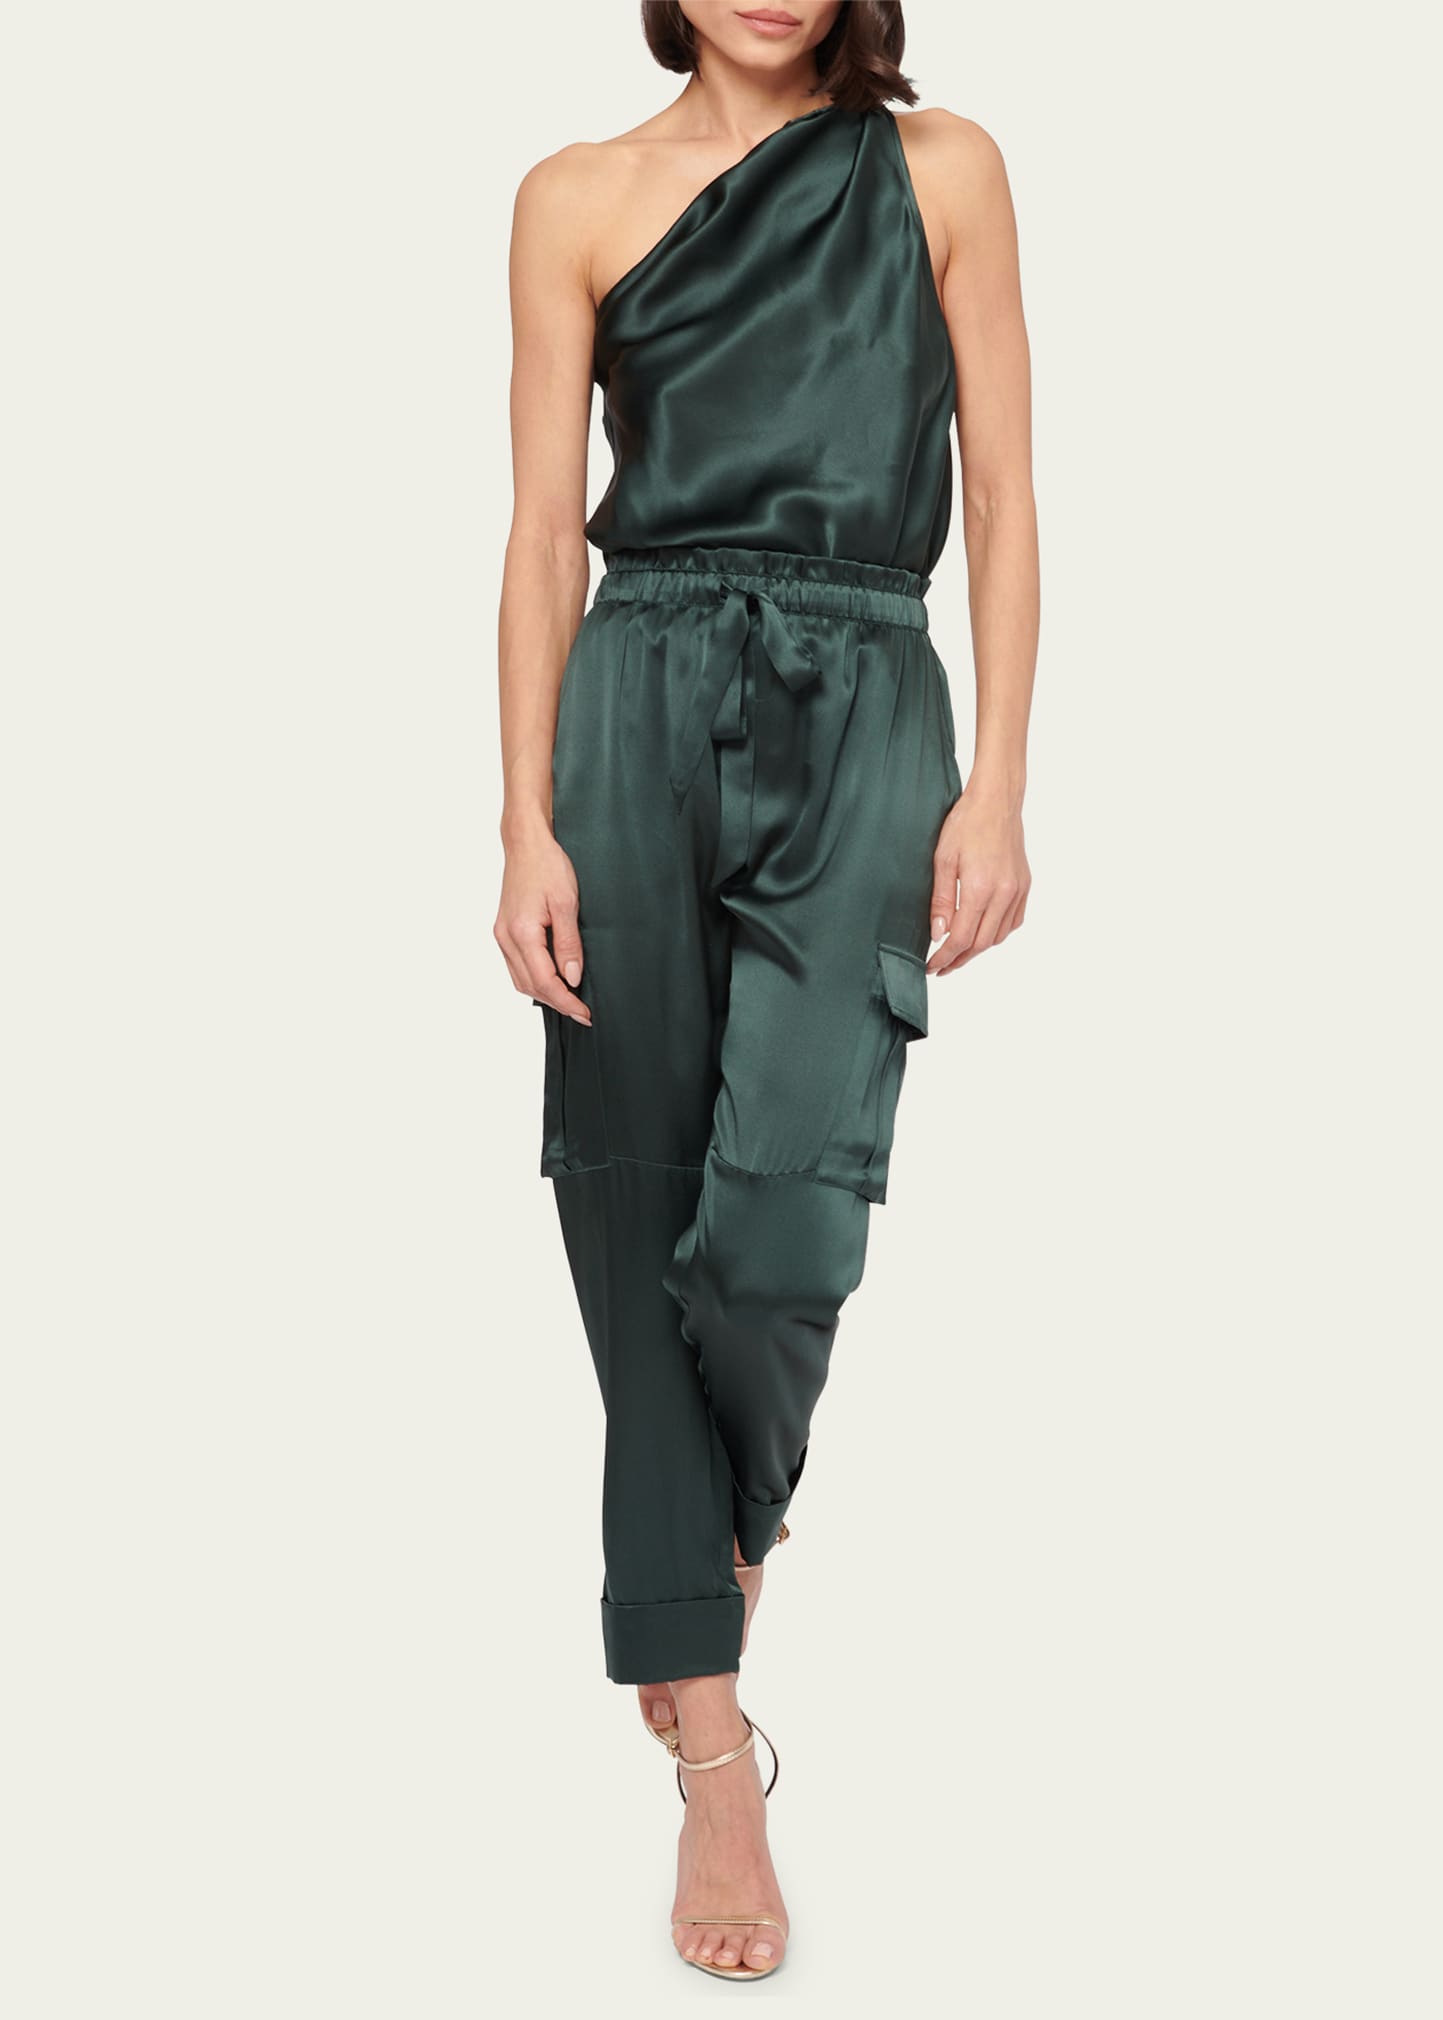 Cami NYC Darby Asymmetric Charmeuse Bodysuit - Bergdorf Goodman